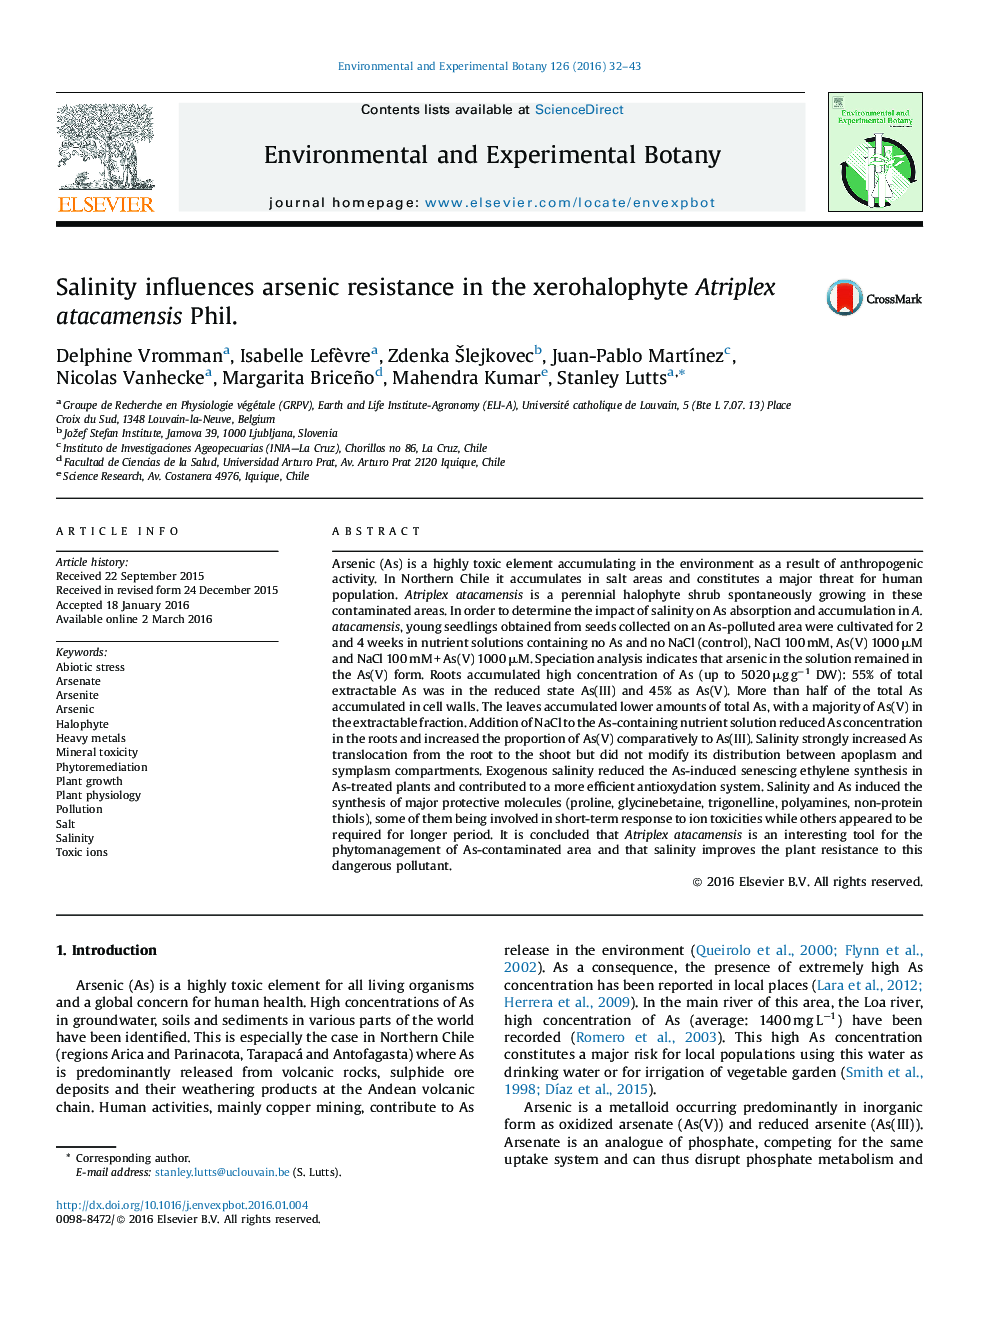 Salinity influences arsenic resistance in the xerohalophyte Atriplex atacamensis Phil.